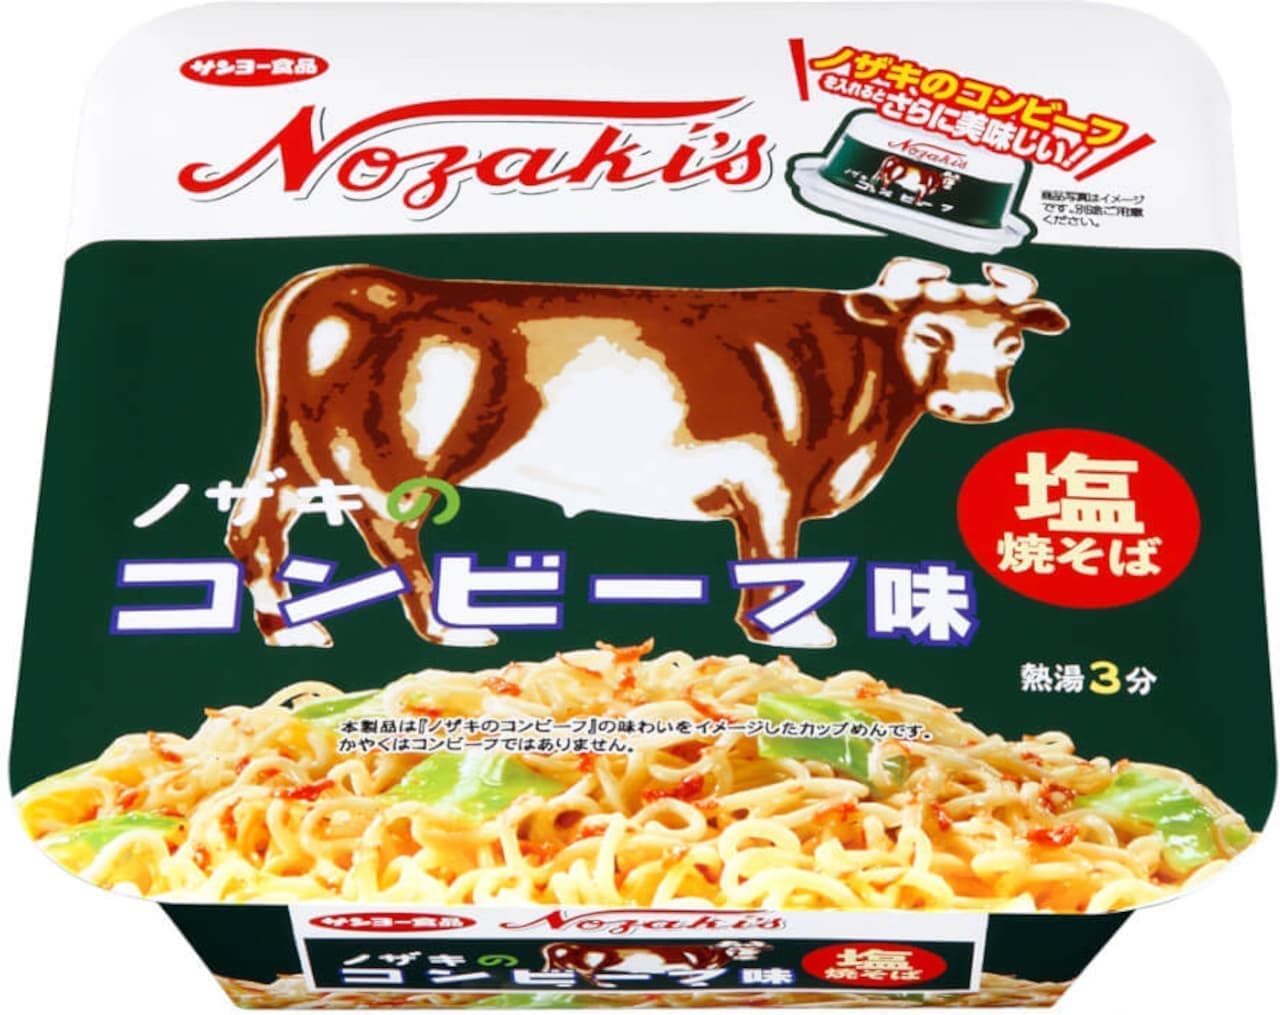 Sanyo Foods "Nozaki's Corned Beef Flavored Salted Soba"